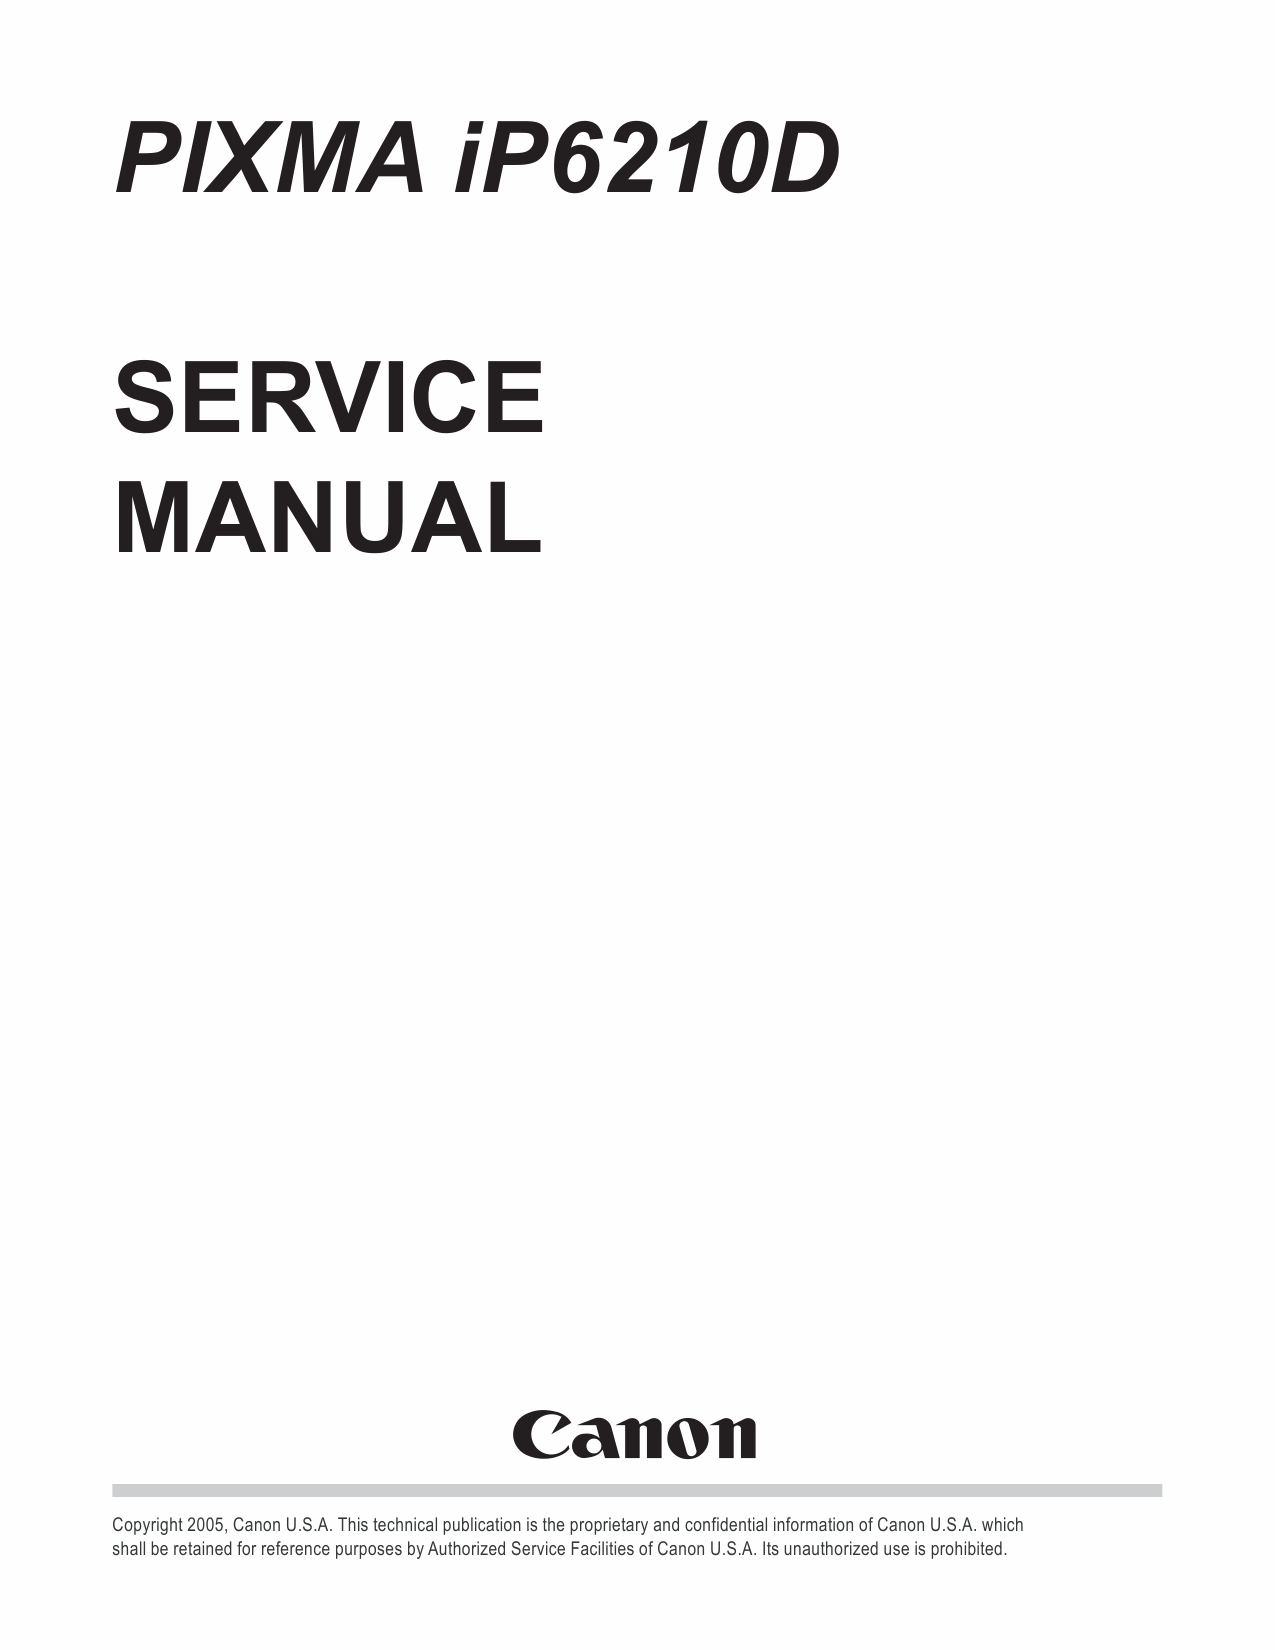 Canon PIXMA iP6210D Service Manual-1